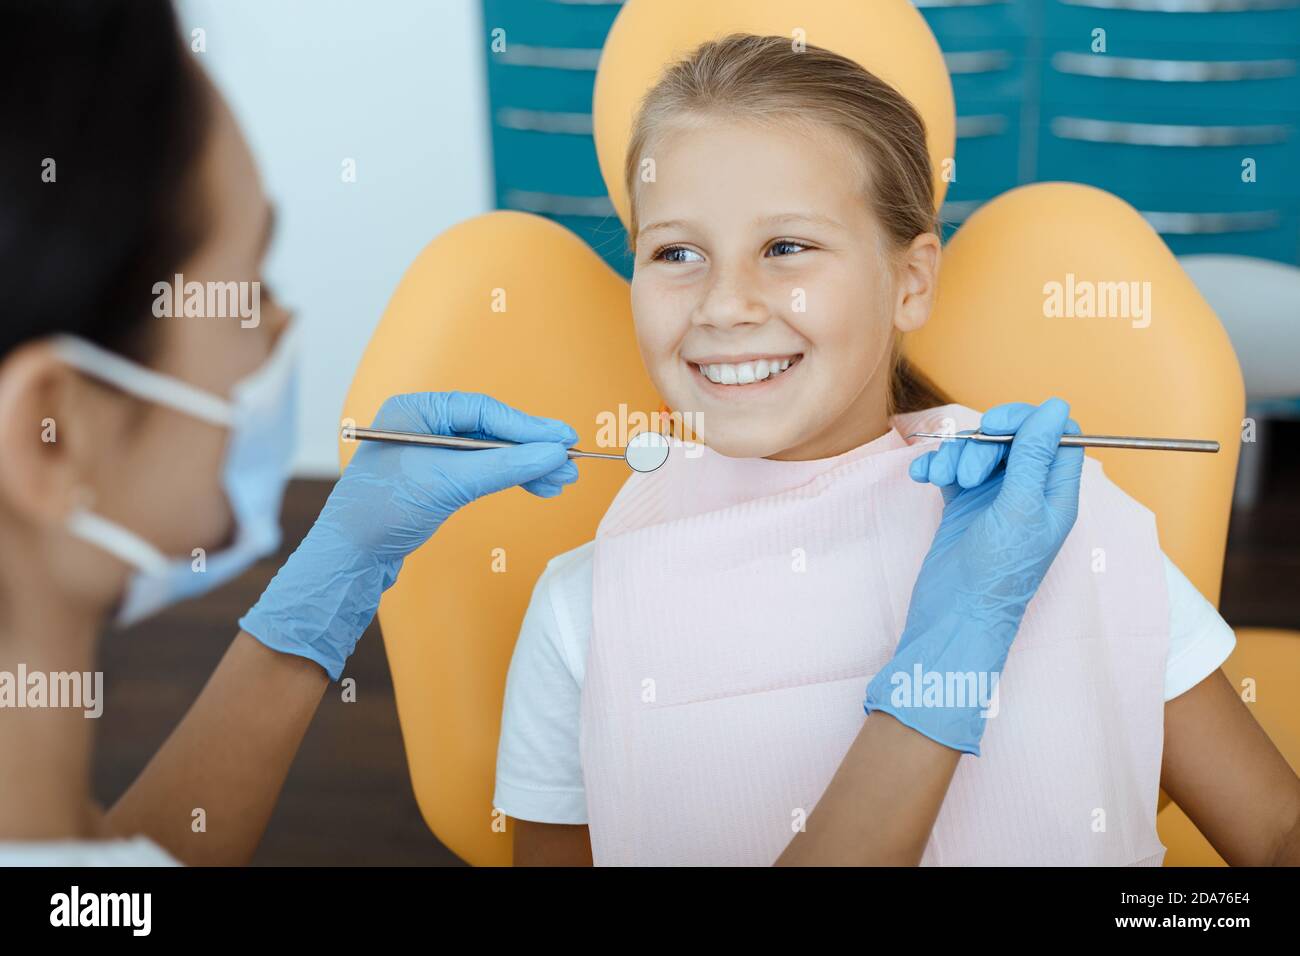 Routine check-ups, snow-white smile and pediatric dentistry Stock Photo